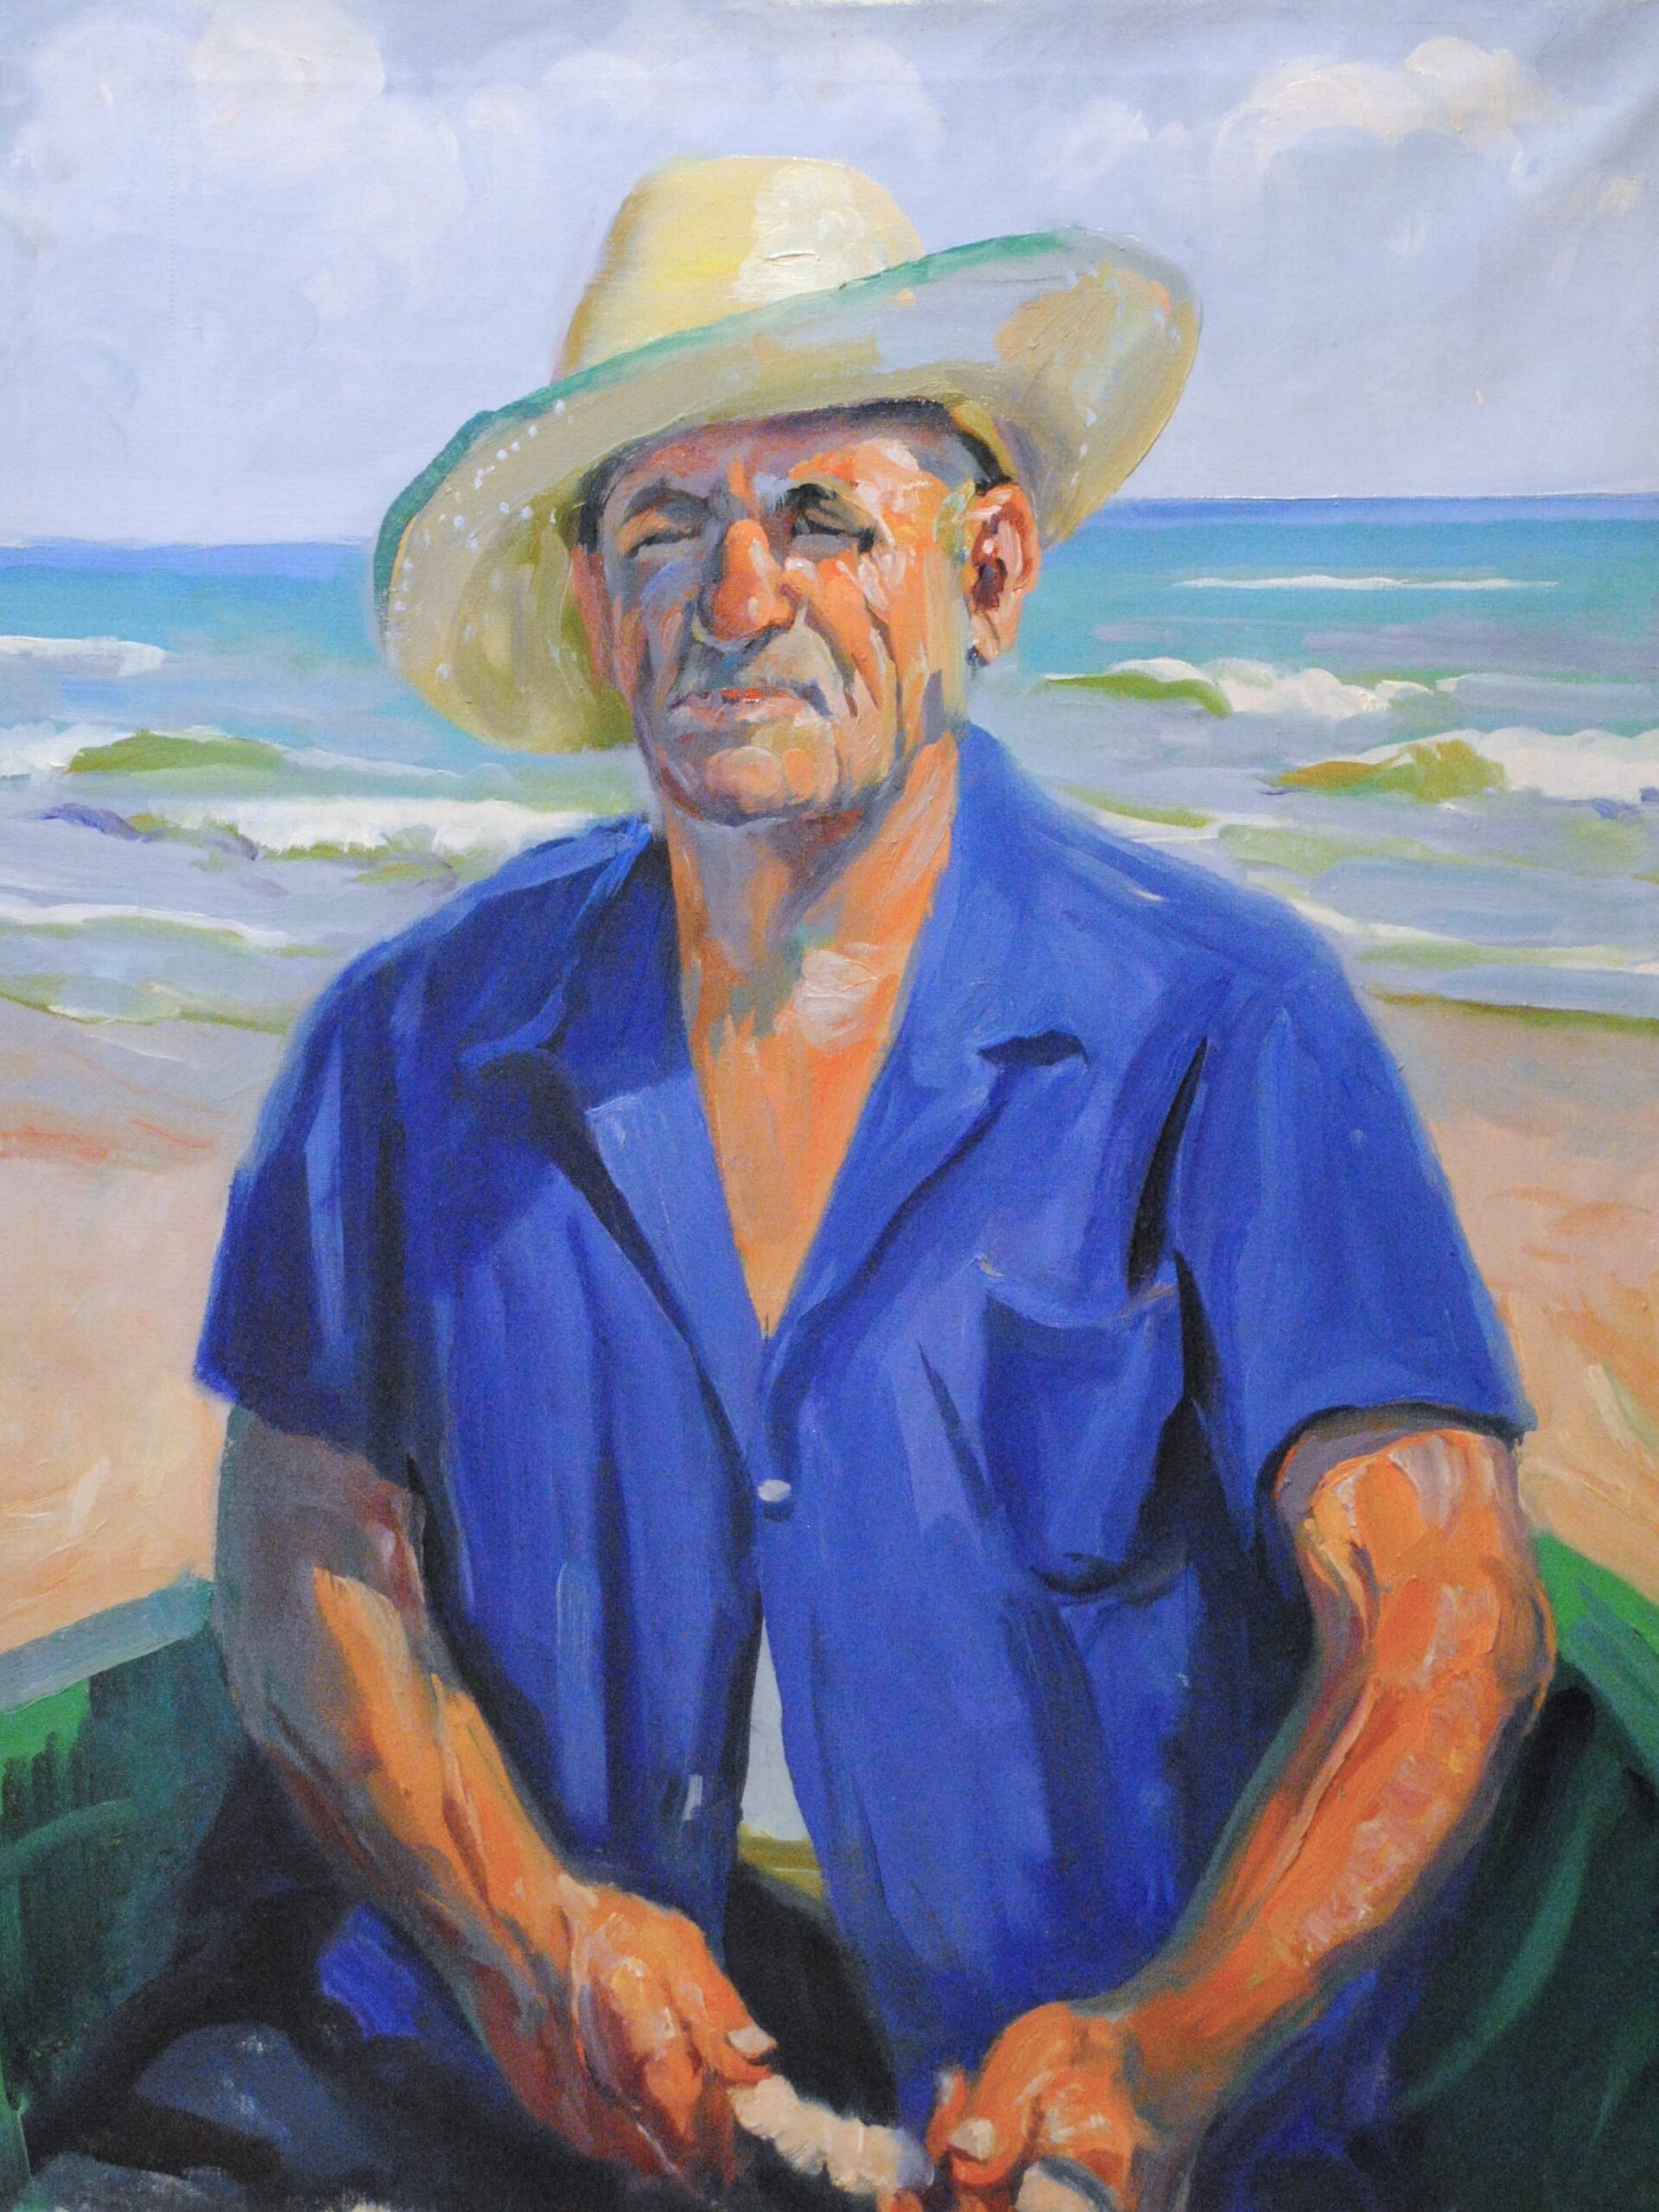 Pintura de José Manaut titulada Pescador Valenciano, 1967. Óleo sobre lienzo.